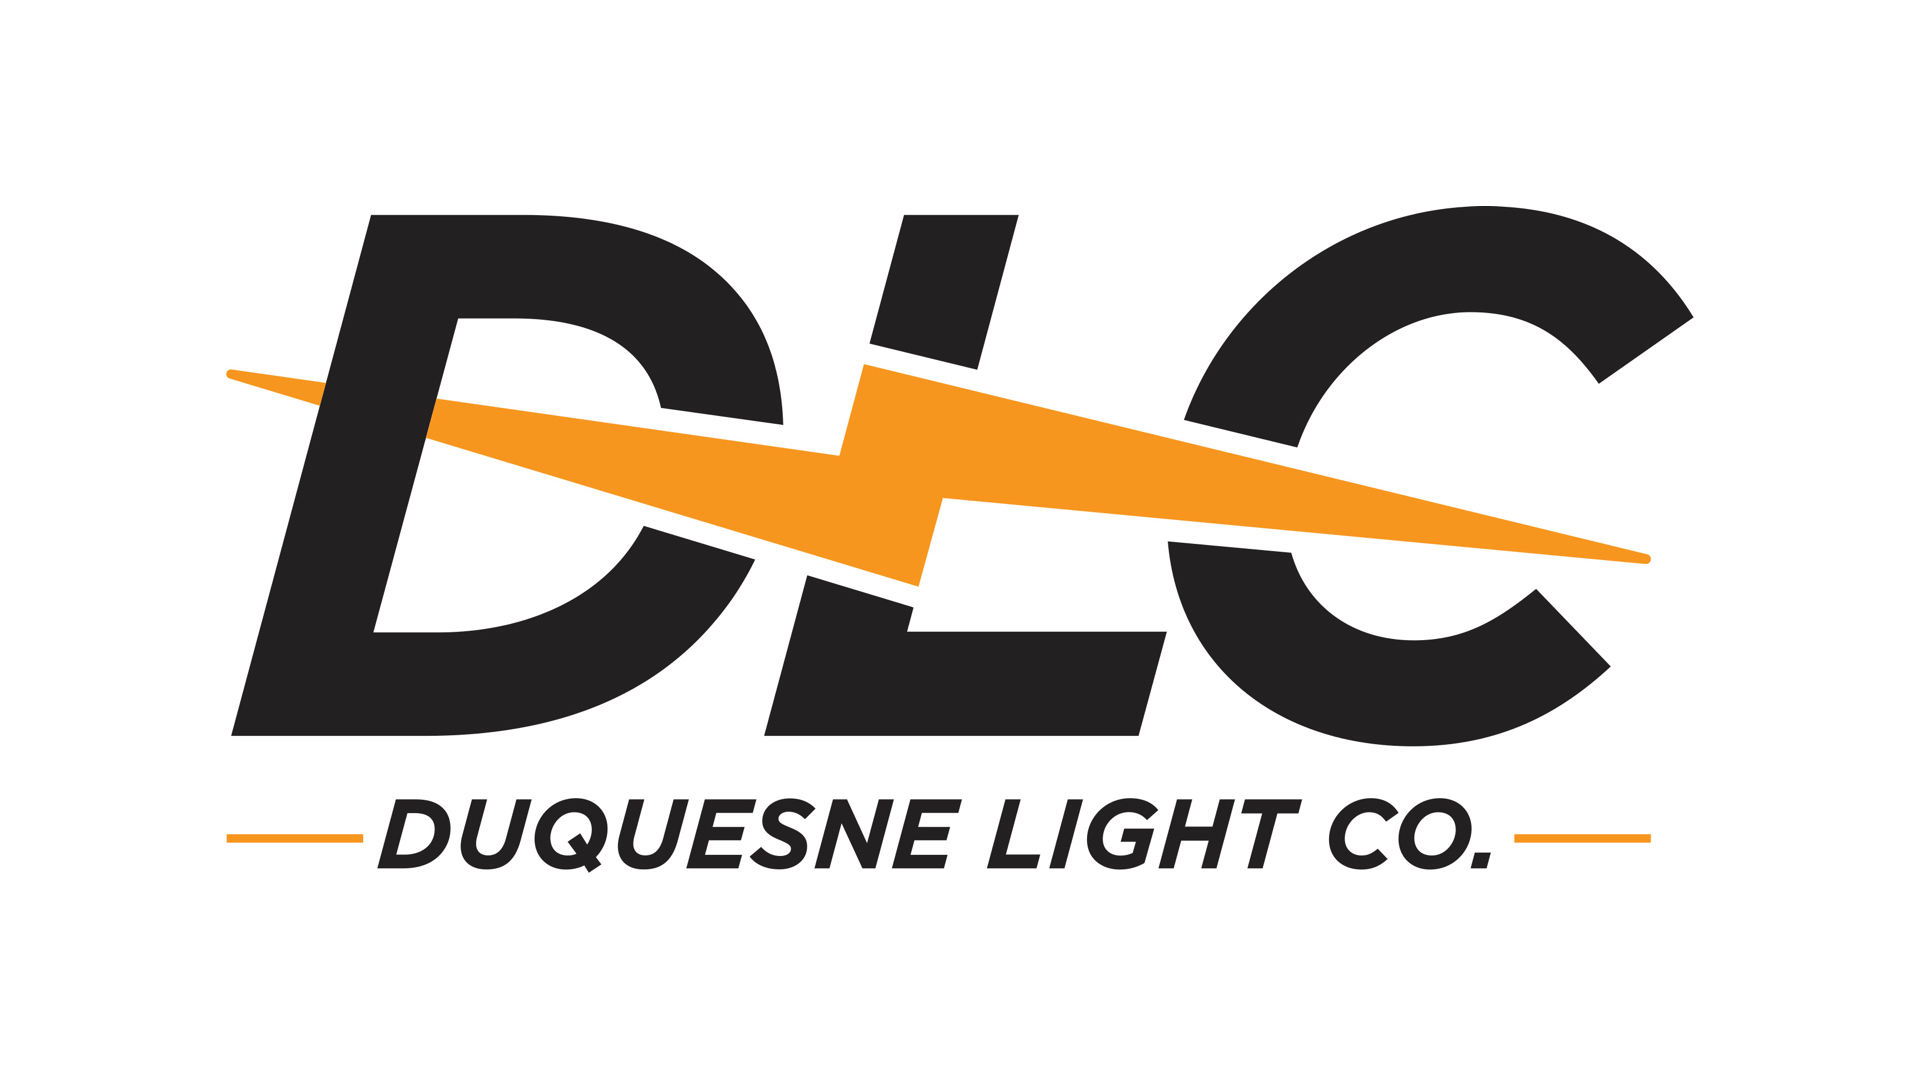 duquesne-light-customer-service-number-412-393-7100